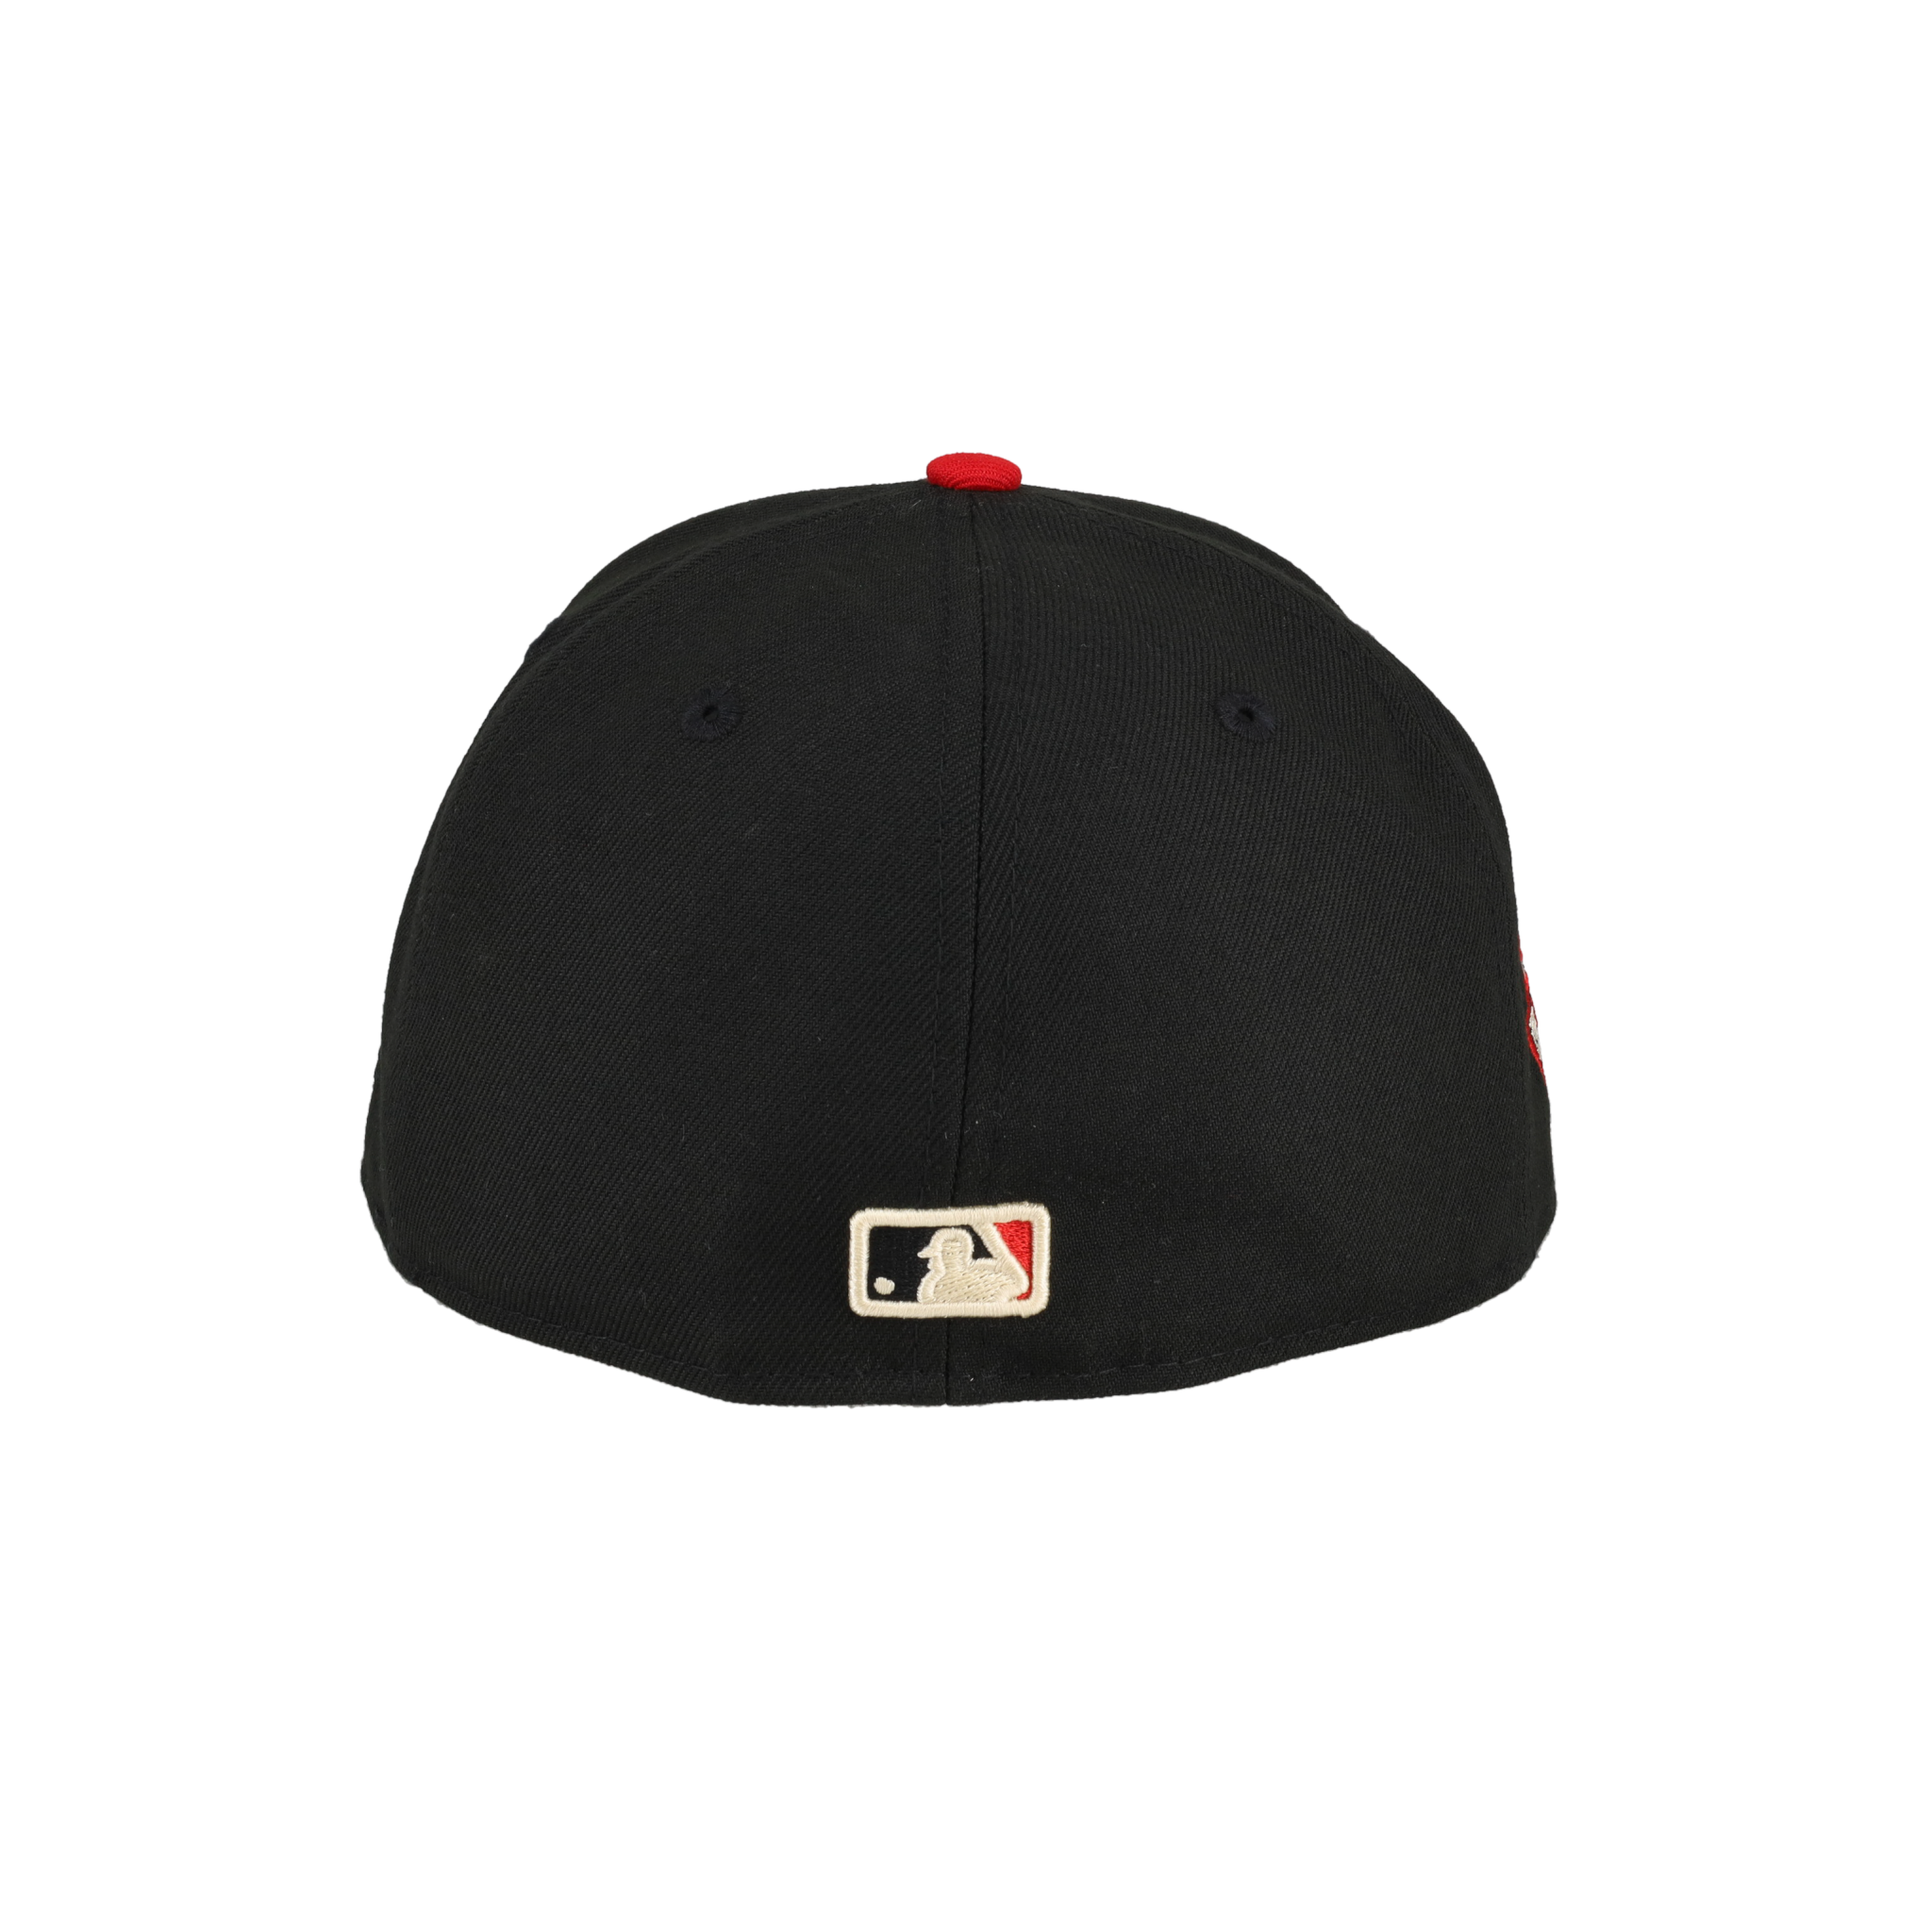 New York Yankees Derek Jeter Patch Script Logo 59FIFTY Fitted Hat 7 7/8